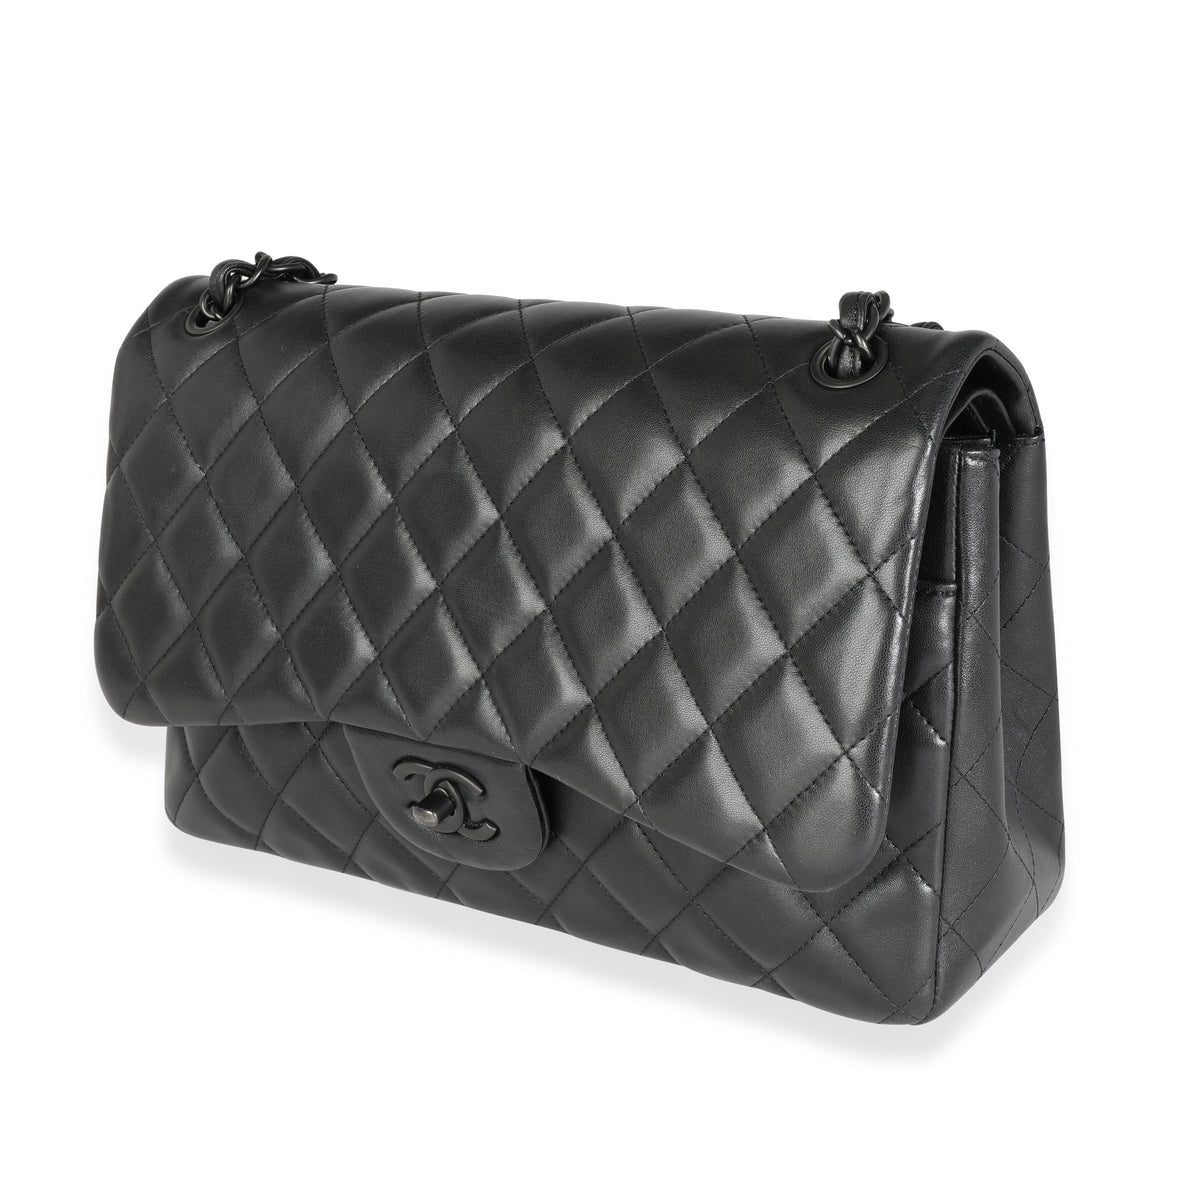 Authentic Chanel So Black Jumbo Rare Bag ❤❤❤